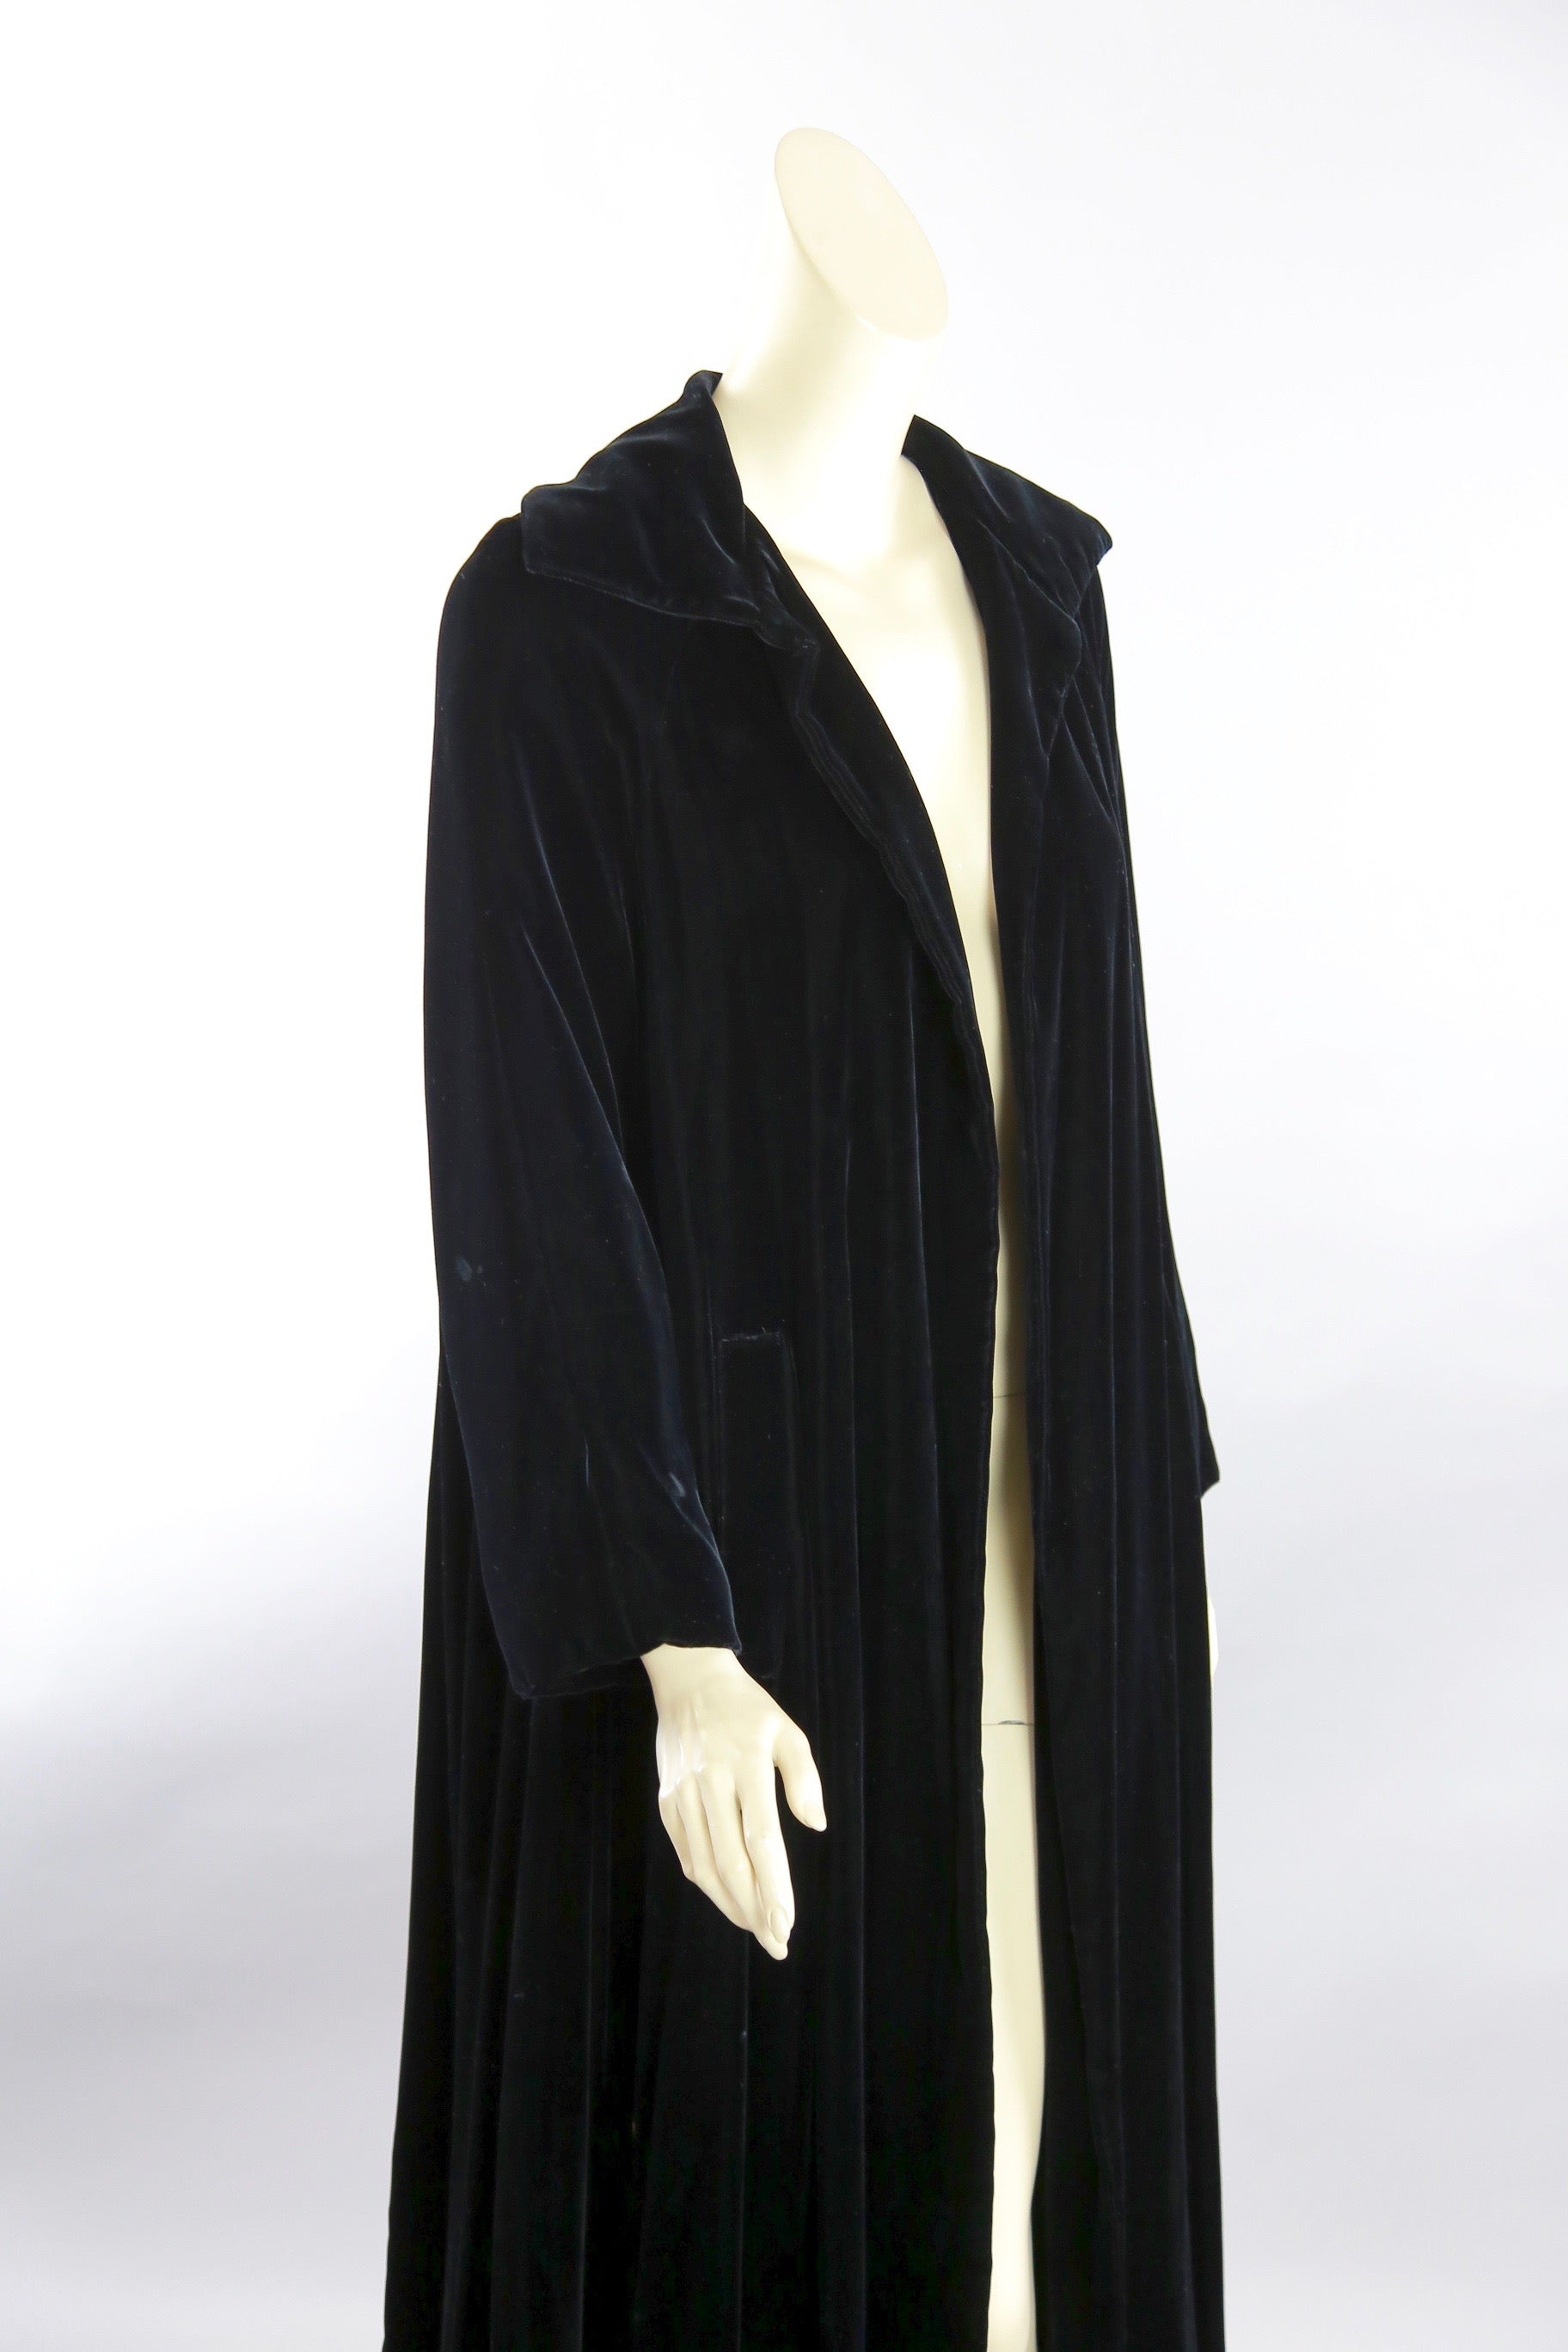 Vintage 50s black velvet opera coat evening cocktail party coat Candi Wrap coat